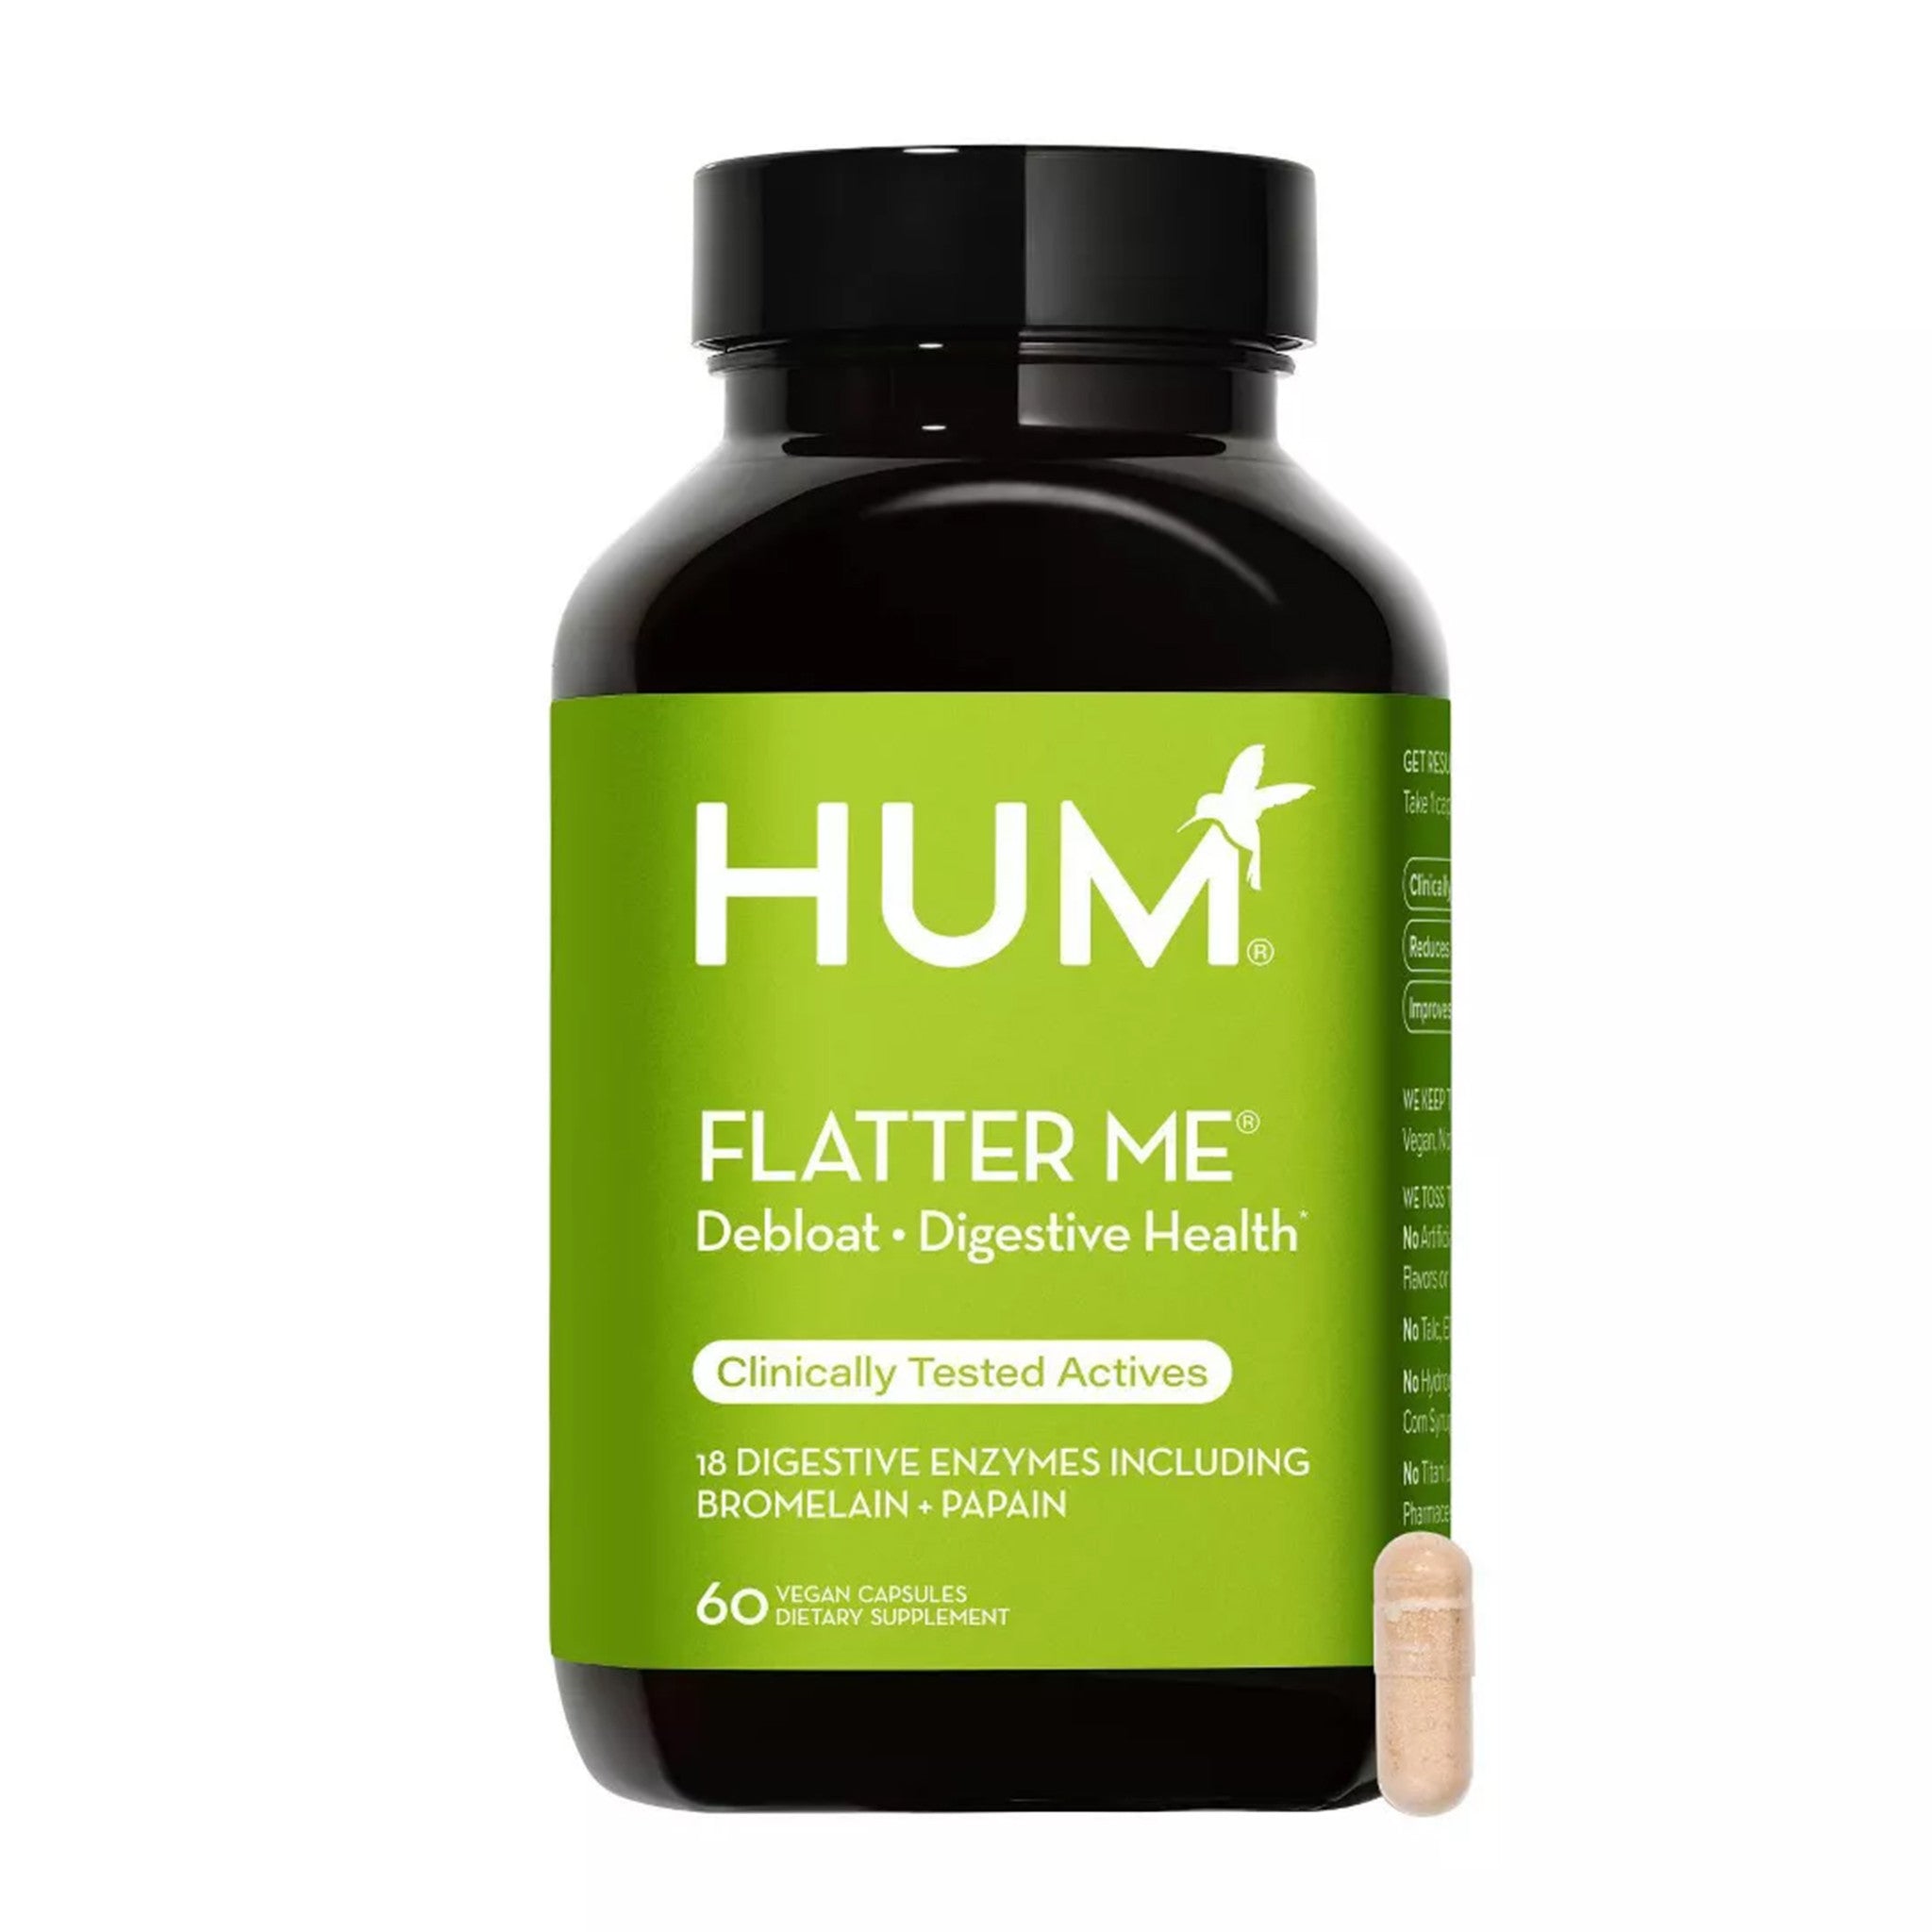 Hum Flatter Me Digestive Enzyme Supplement main image.